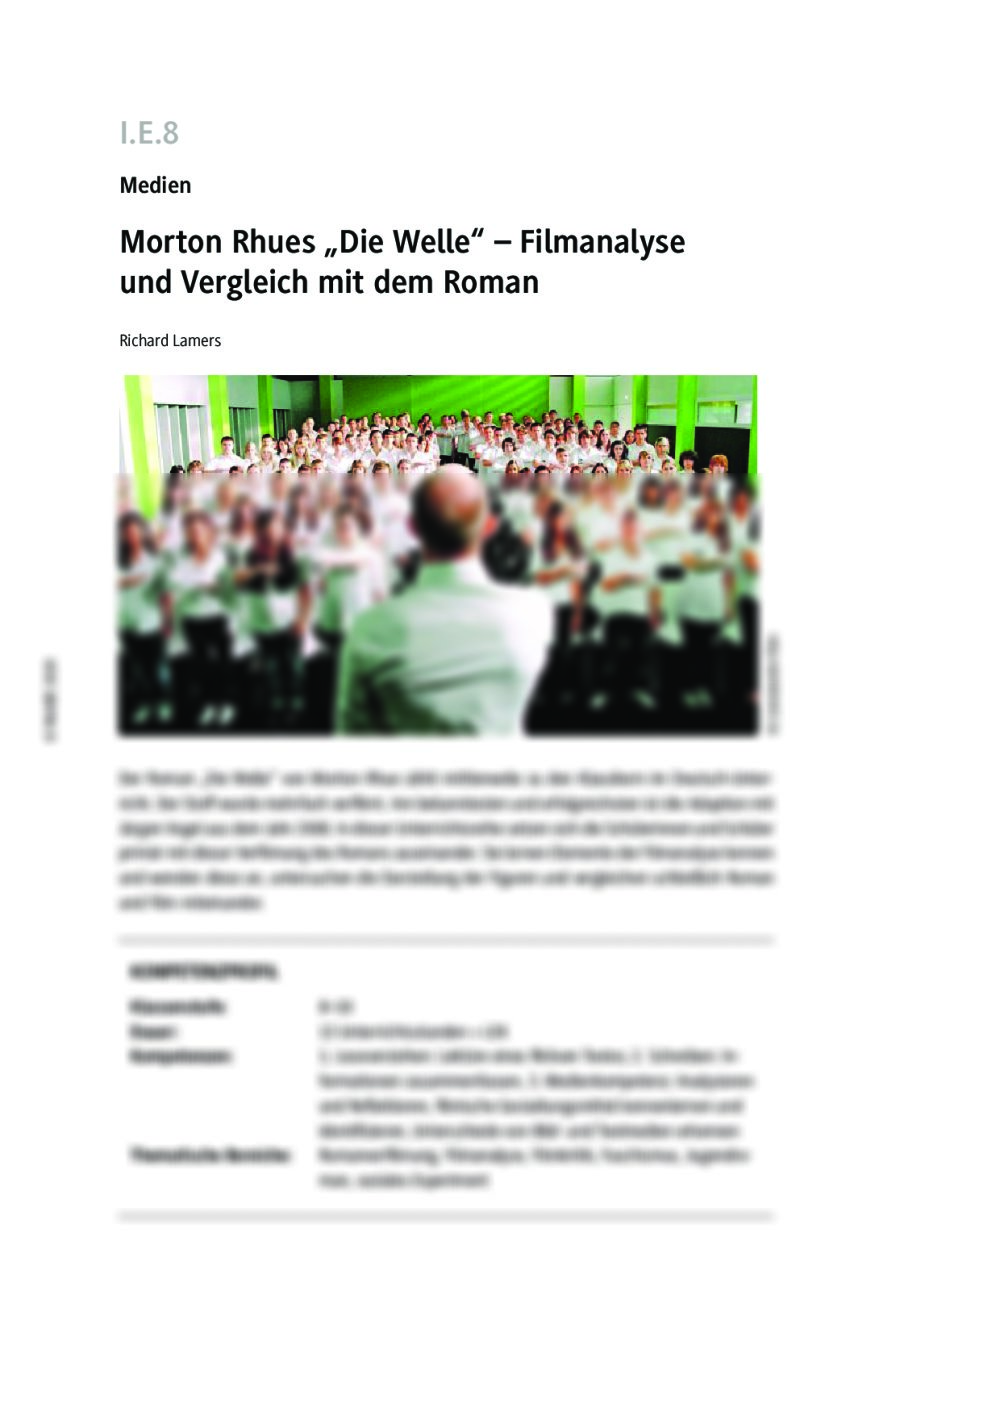 Morton Rhues “Die Welle” - Unterrichtsmaterial - Seite 1